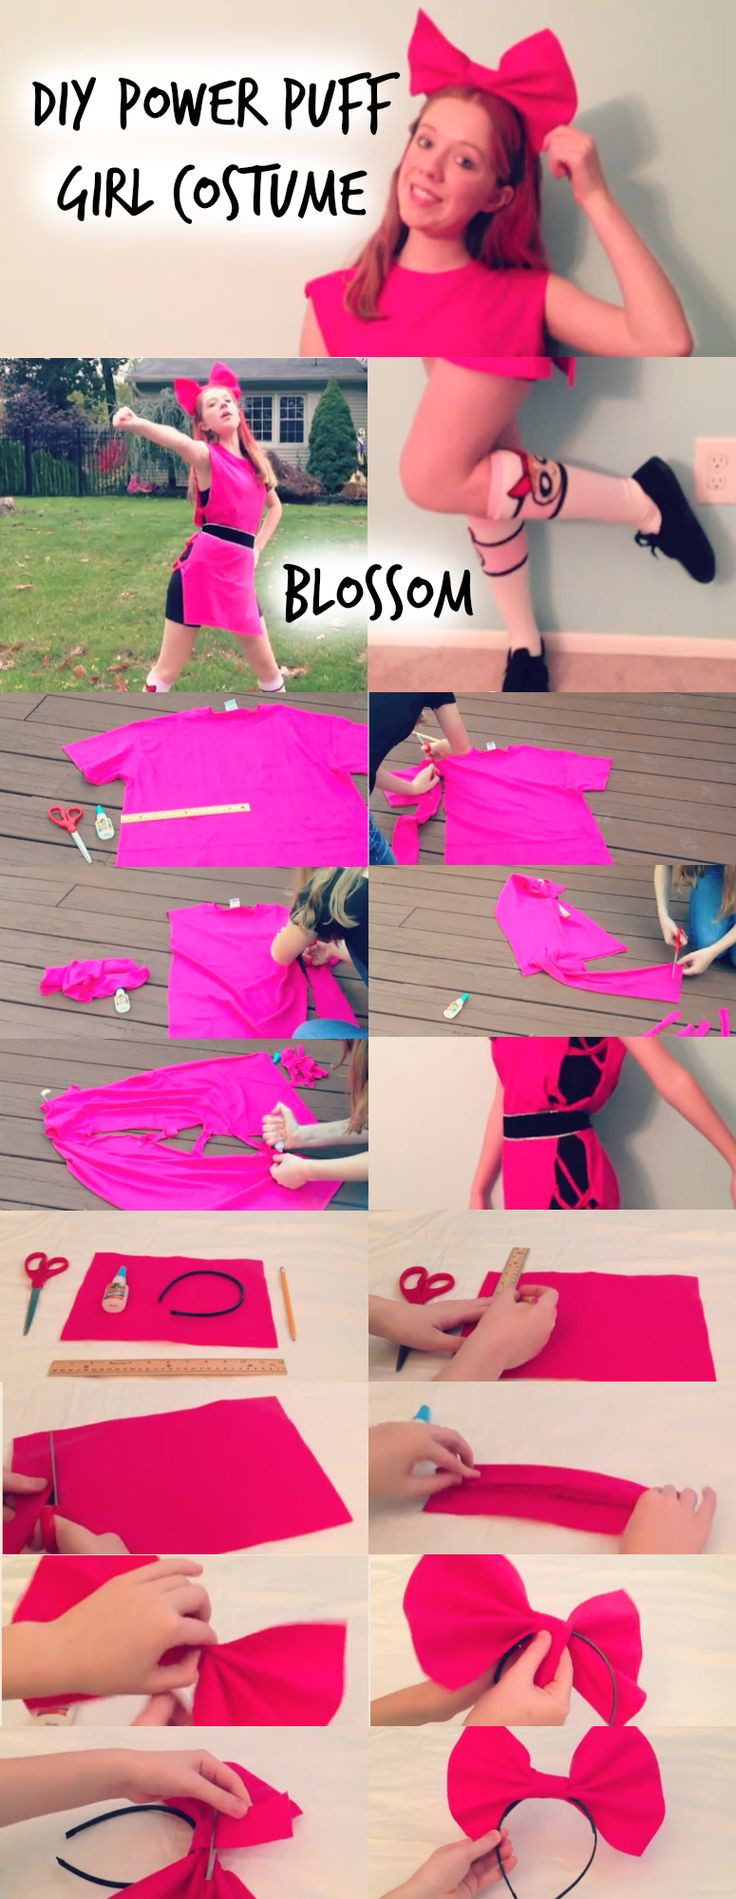 DIY Powerpuff Girl Costumes
 25 best ideas about Powerpuff girls costume on Pinterest